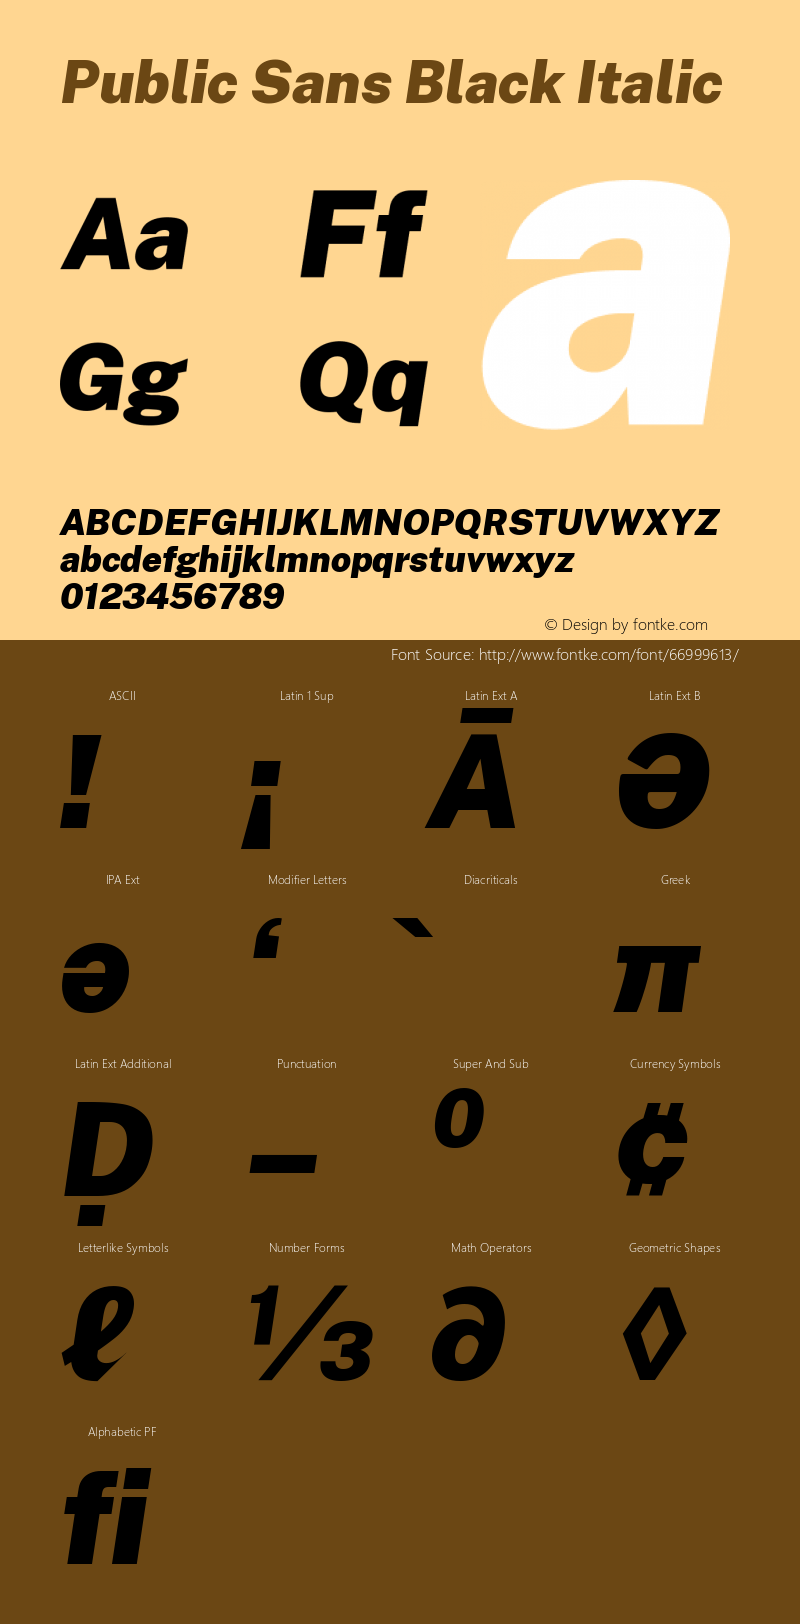 Public Sans Black Italic Version 1.002 Font Sample